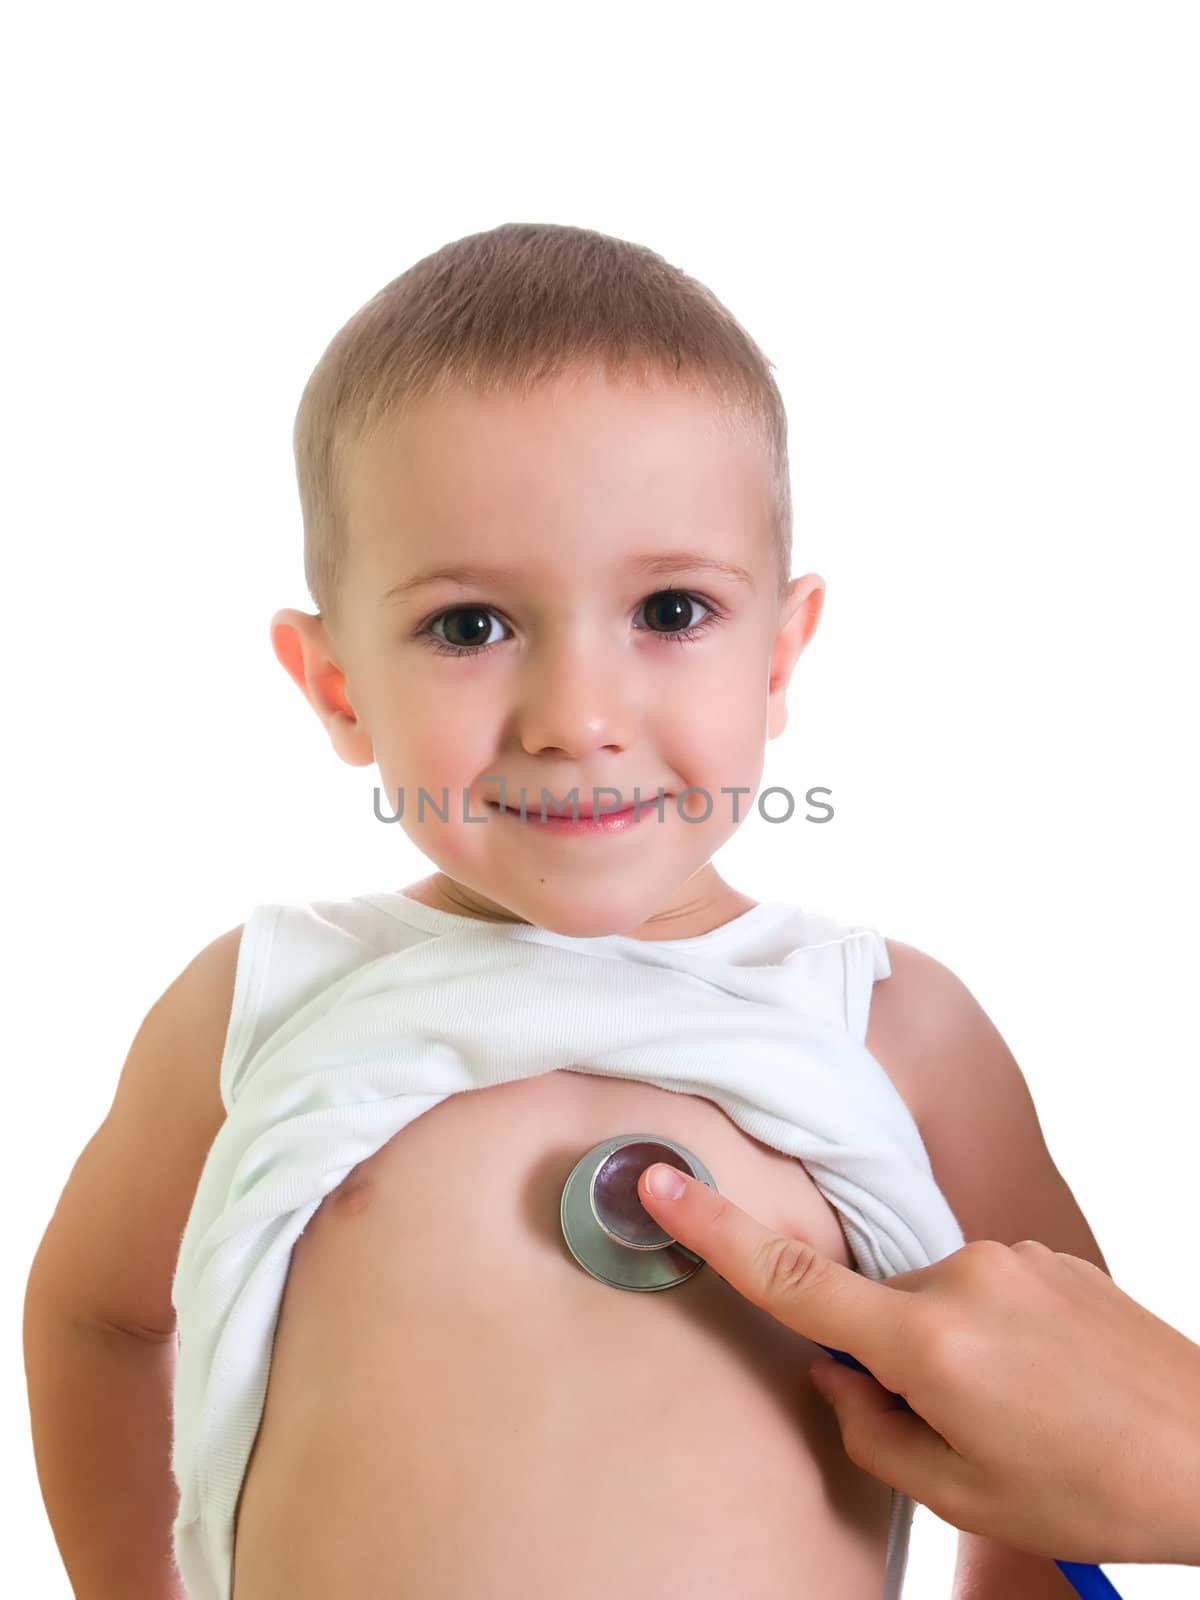 Stethoscope on child by ia_64